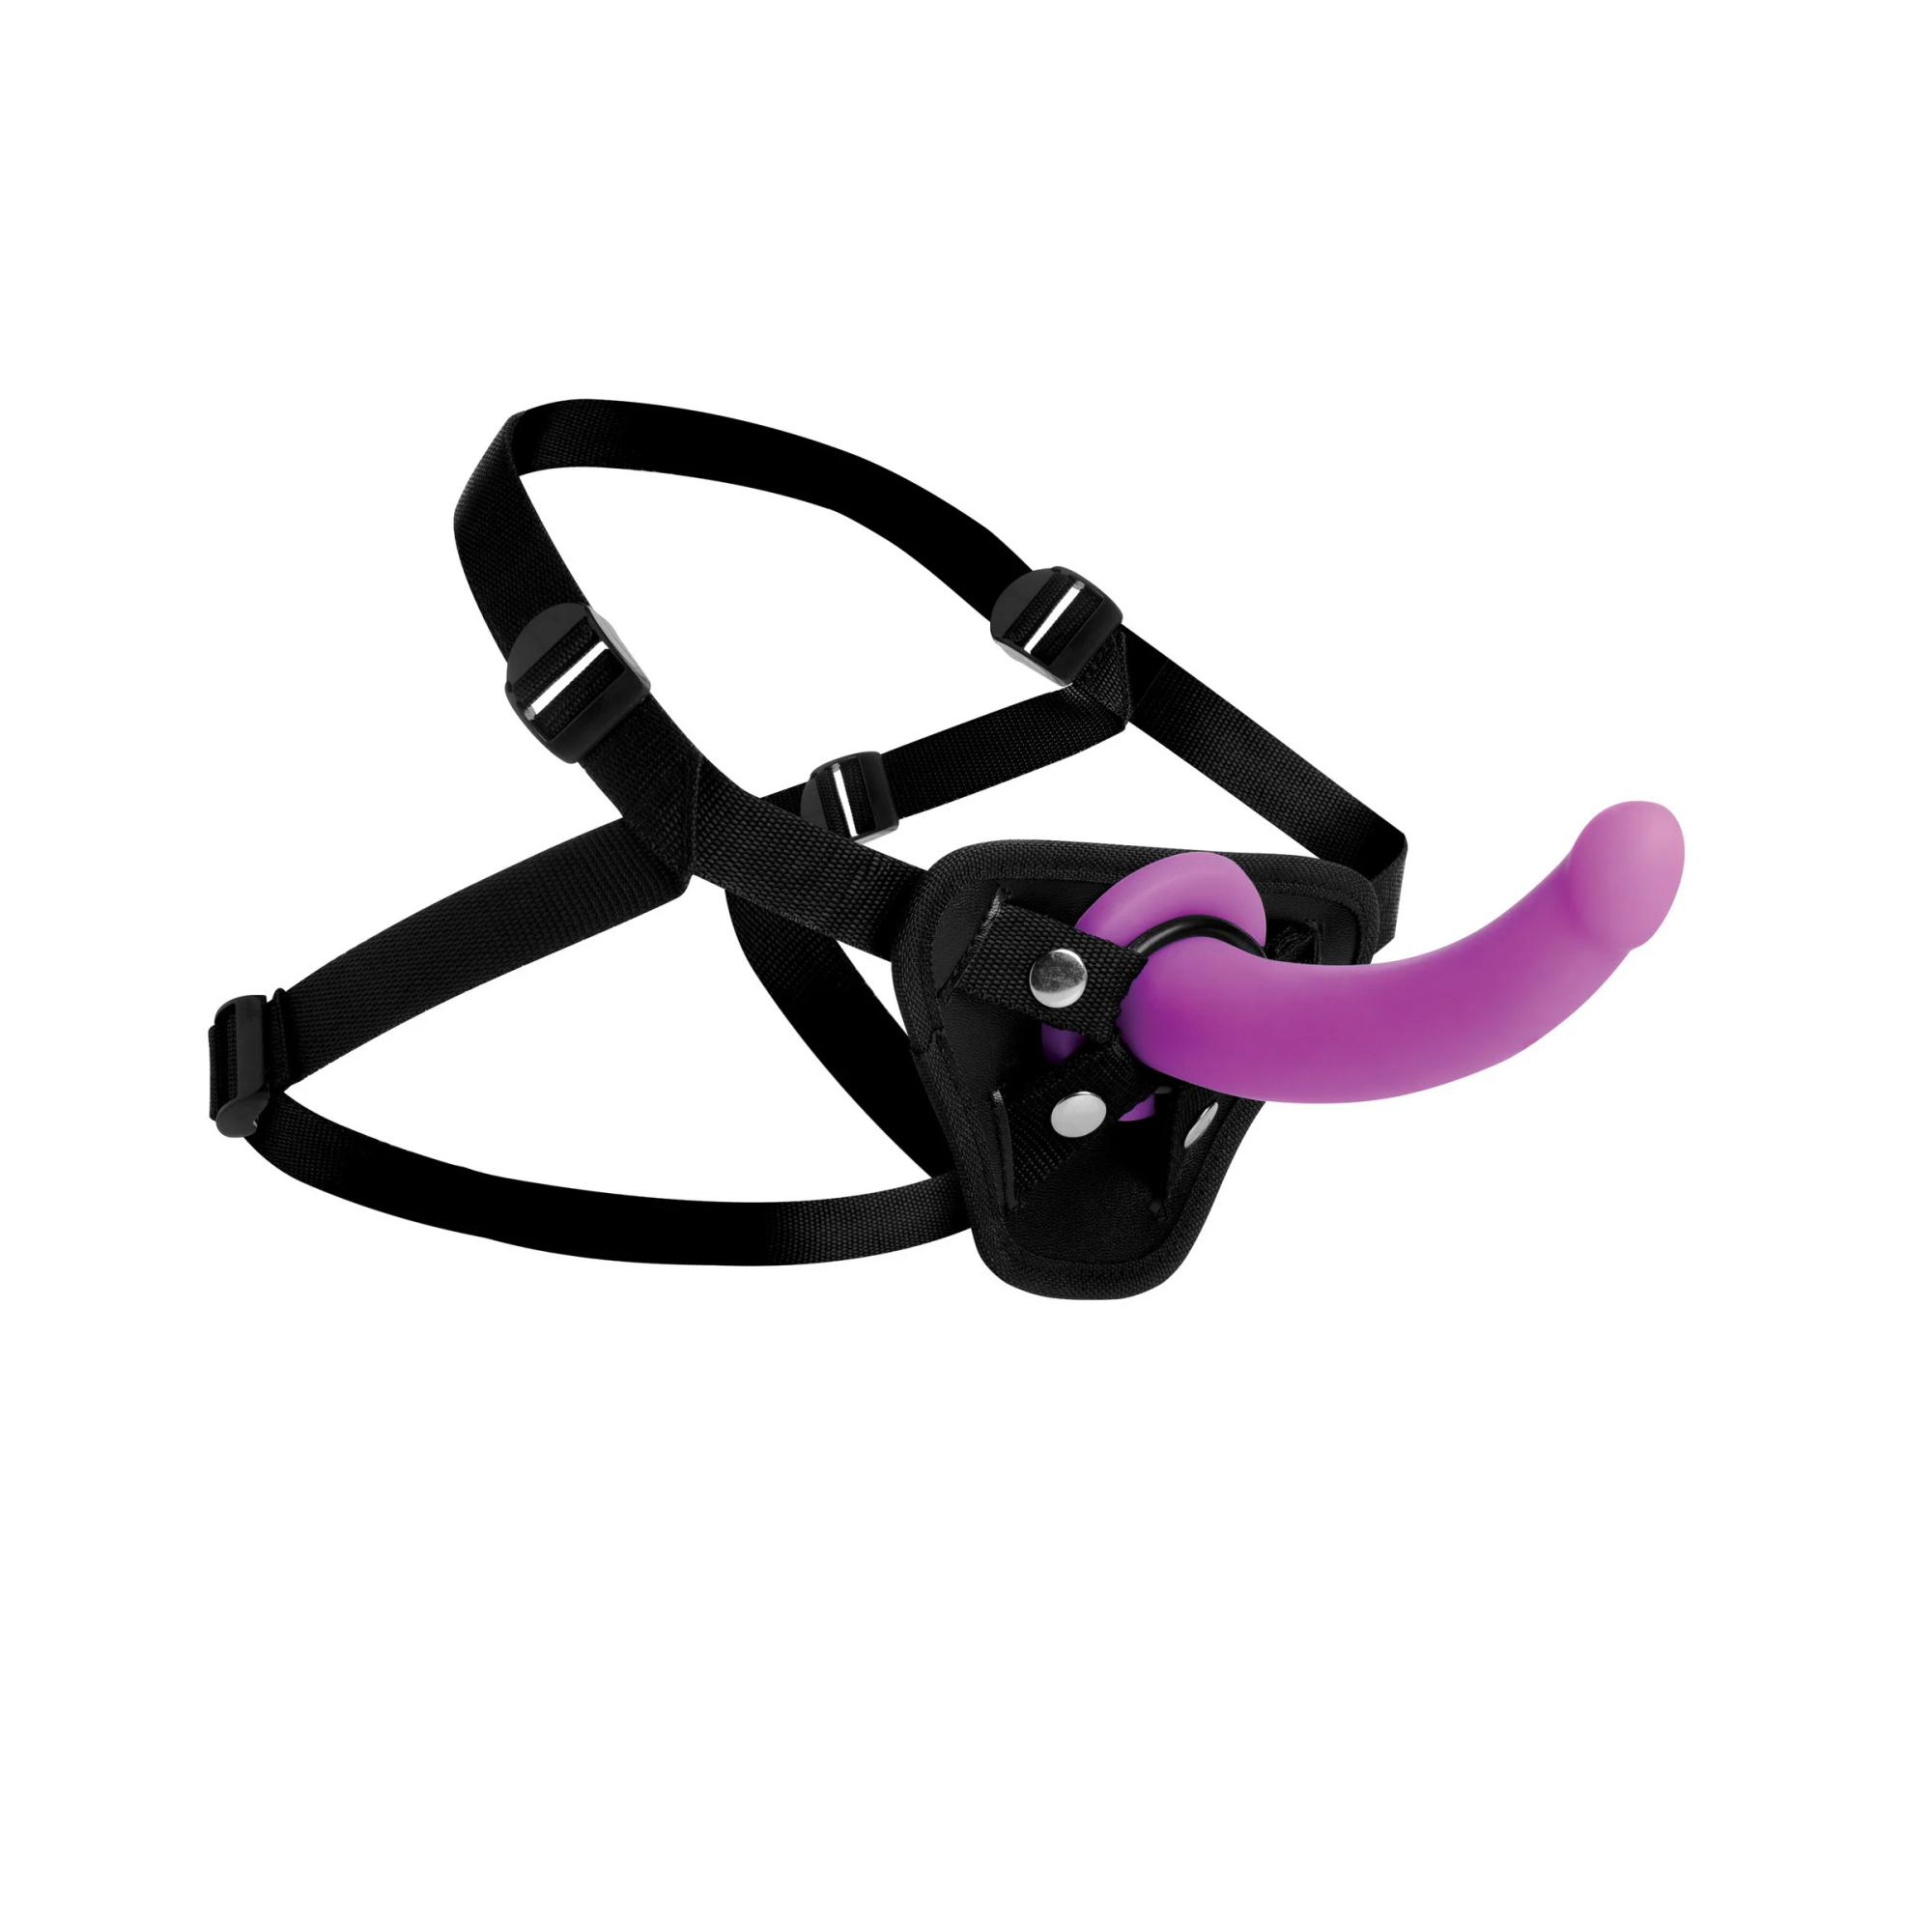 Strap U Navigator Silicone G-Spot Dildo With Harness - страпон с изогнутой насадкой, 17.8х3.7 см (фиолетовый)